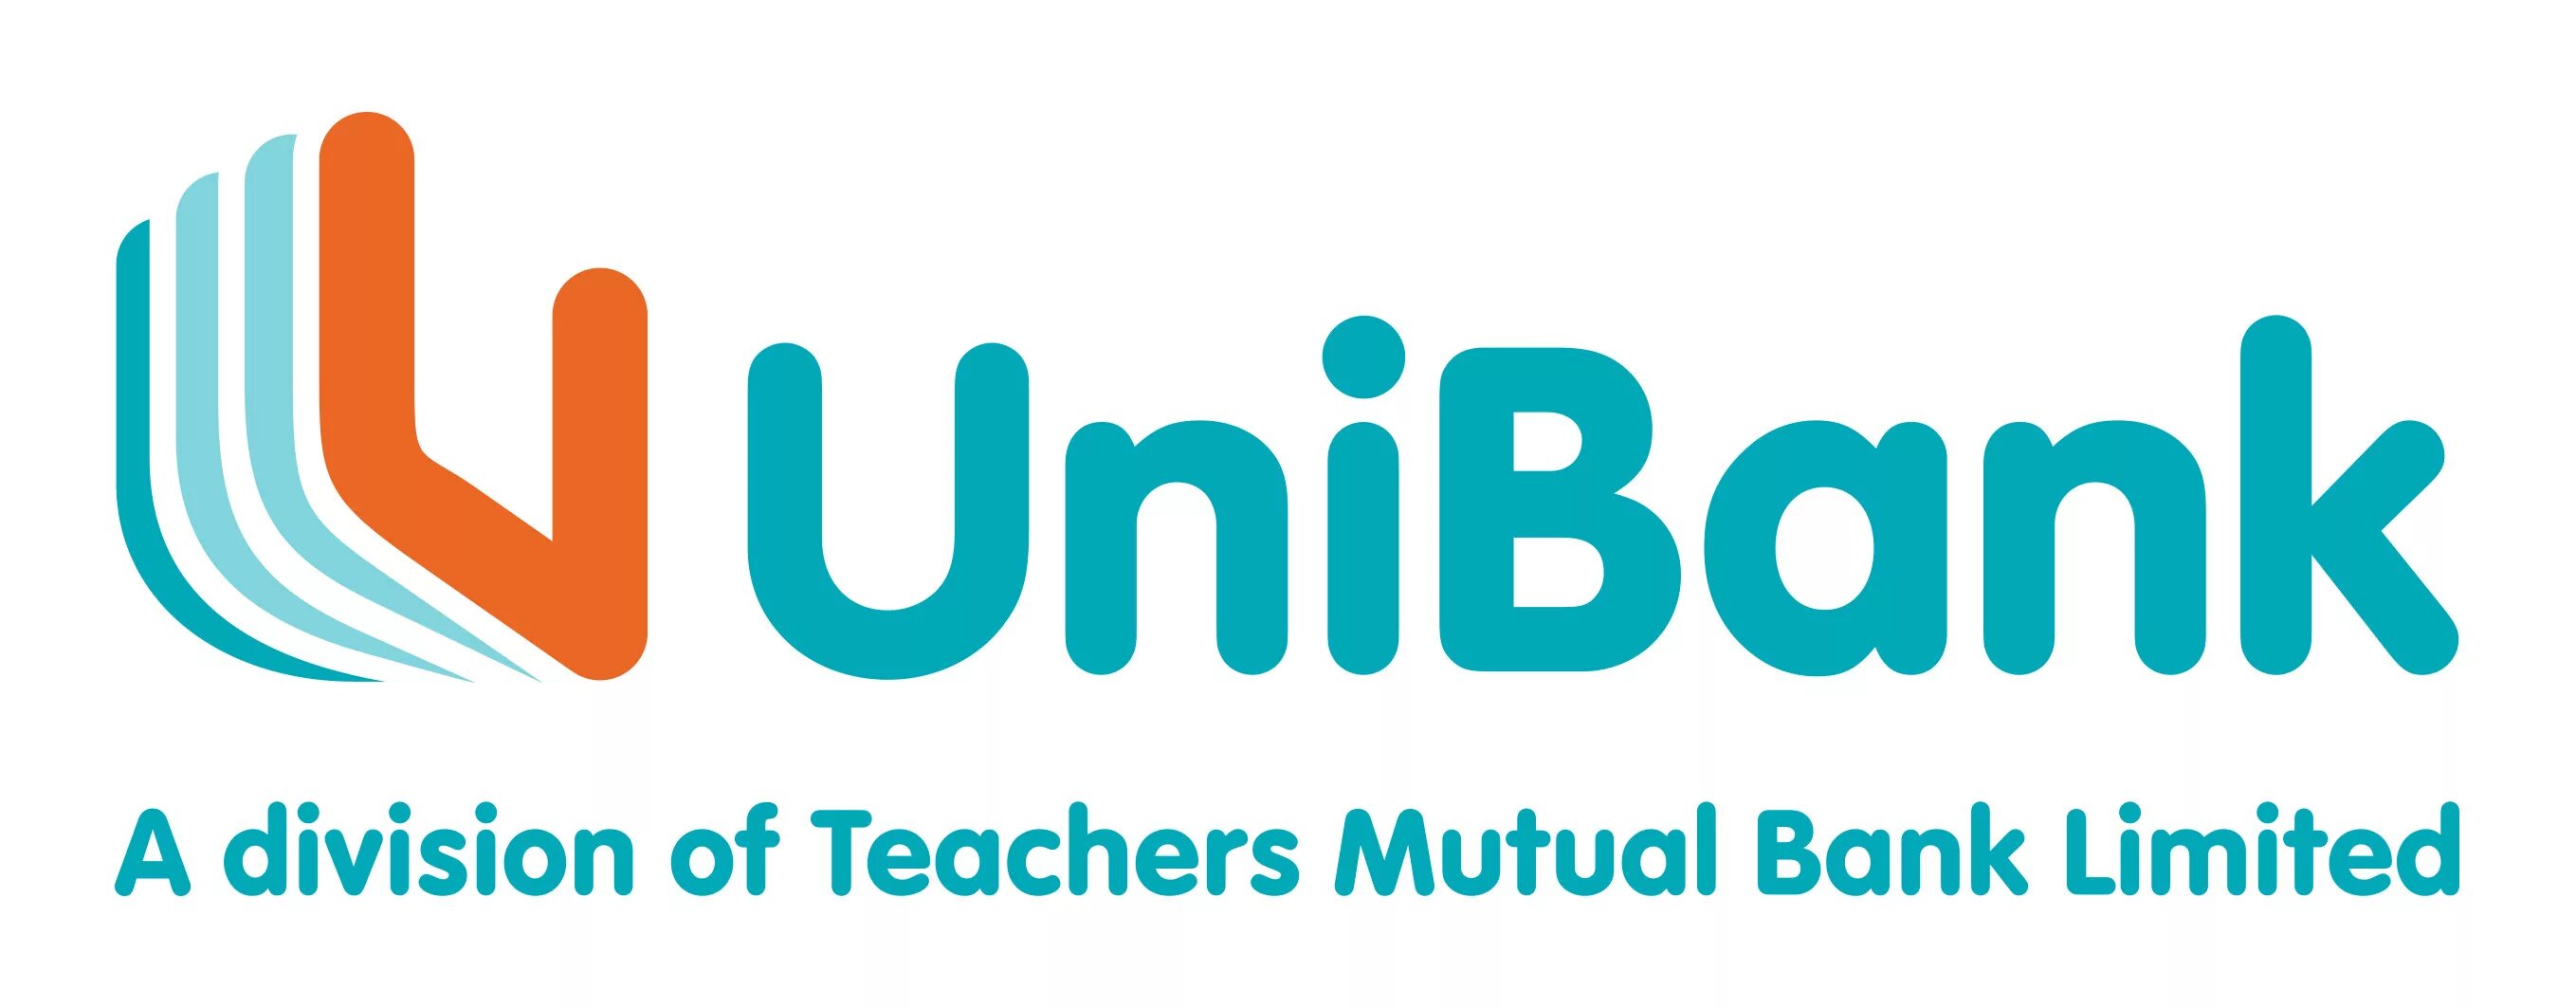 Unibank armenia. Unibank. Юнибанк Азербайджан. Unibank logo. Unibank Azerbaijan logo.